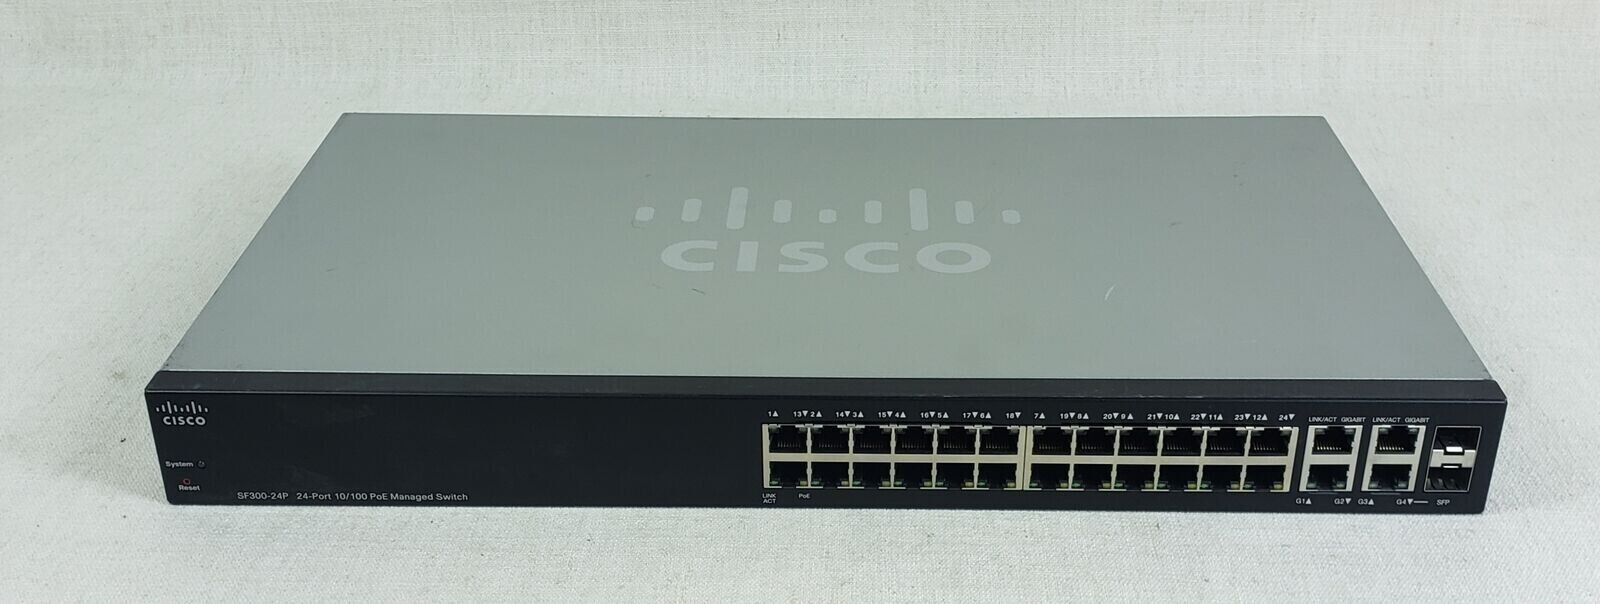 Cisco SF300-24P 24-Port 10/100 PoE+ Managed Switch SRW224G4P-K9